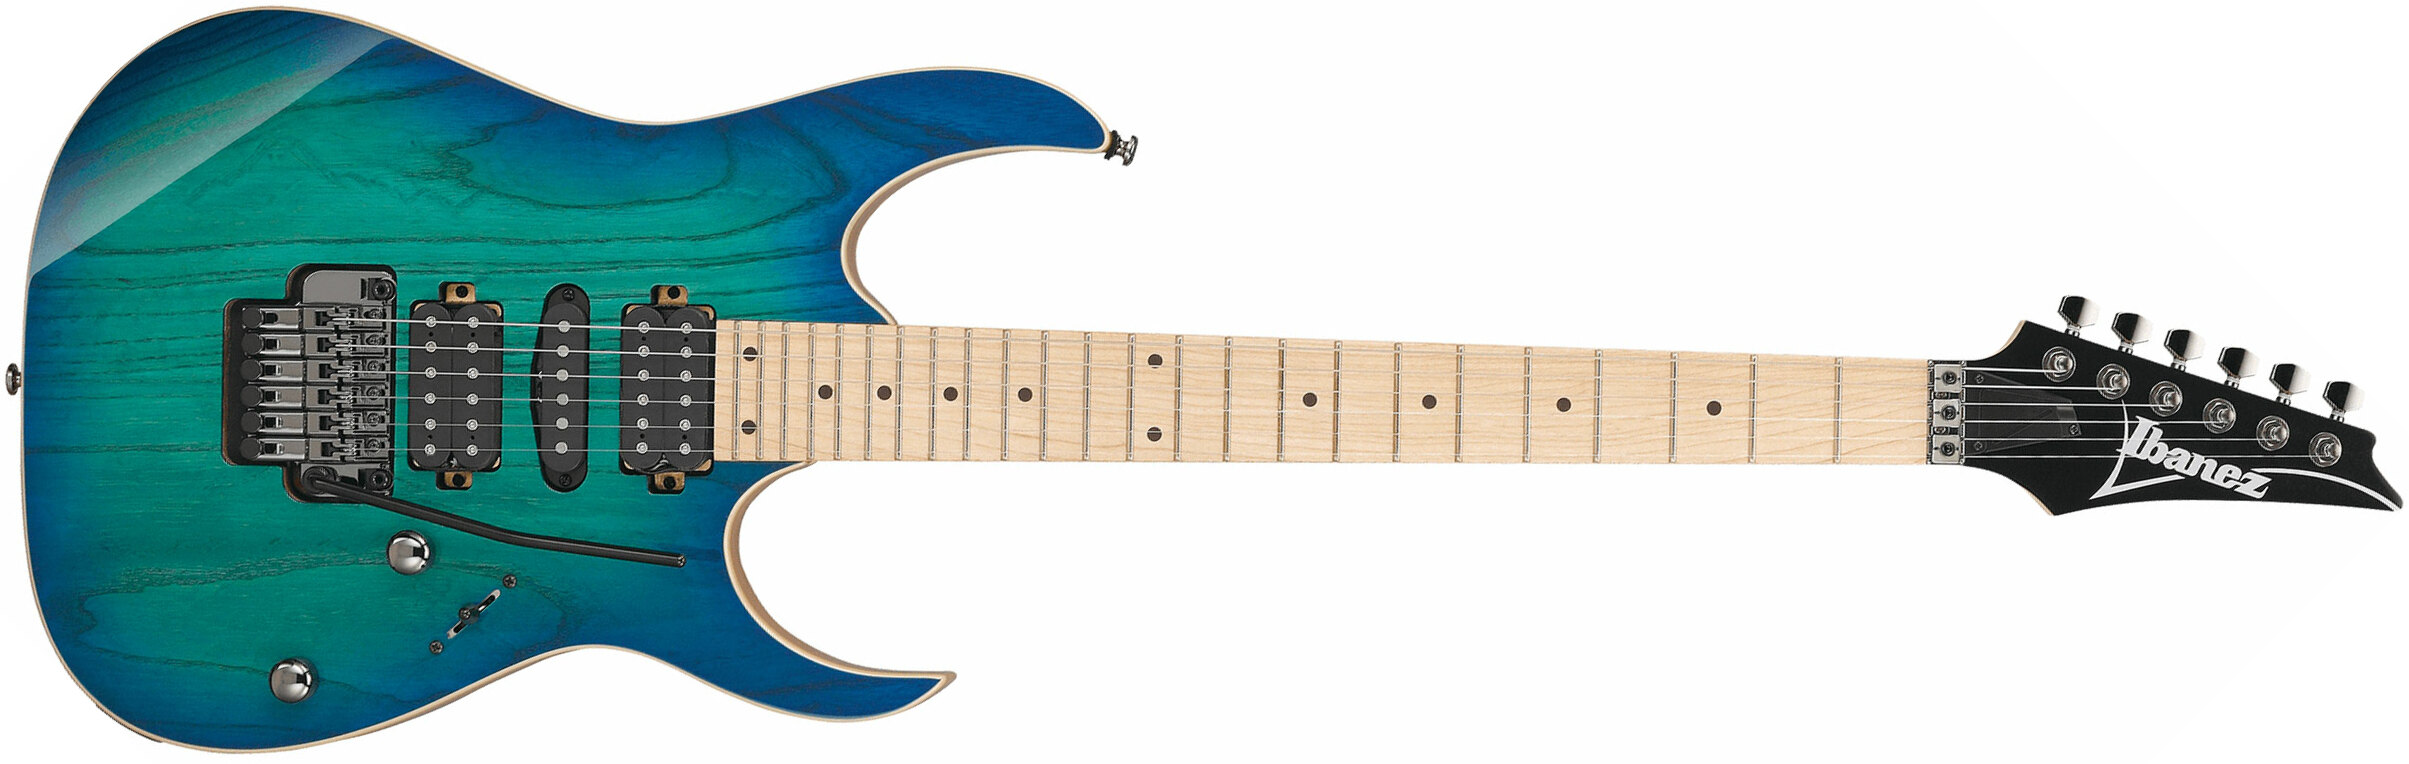 Ibanez Rg470ahm Bmt Standard Hsh Fr Mn - Blue Moon Burst - E-Gitarre in Str-Form - Main picture